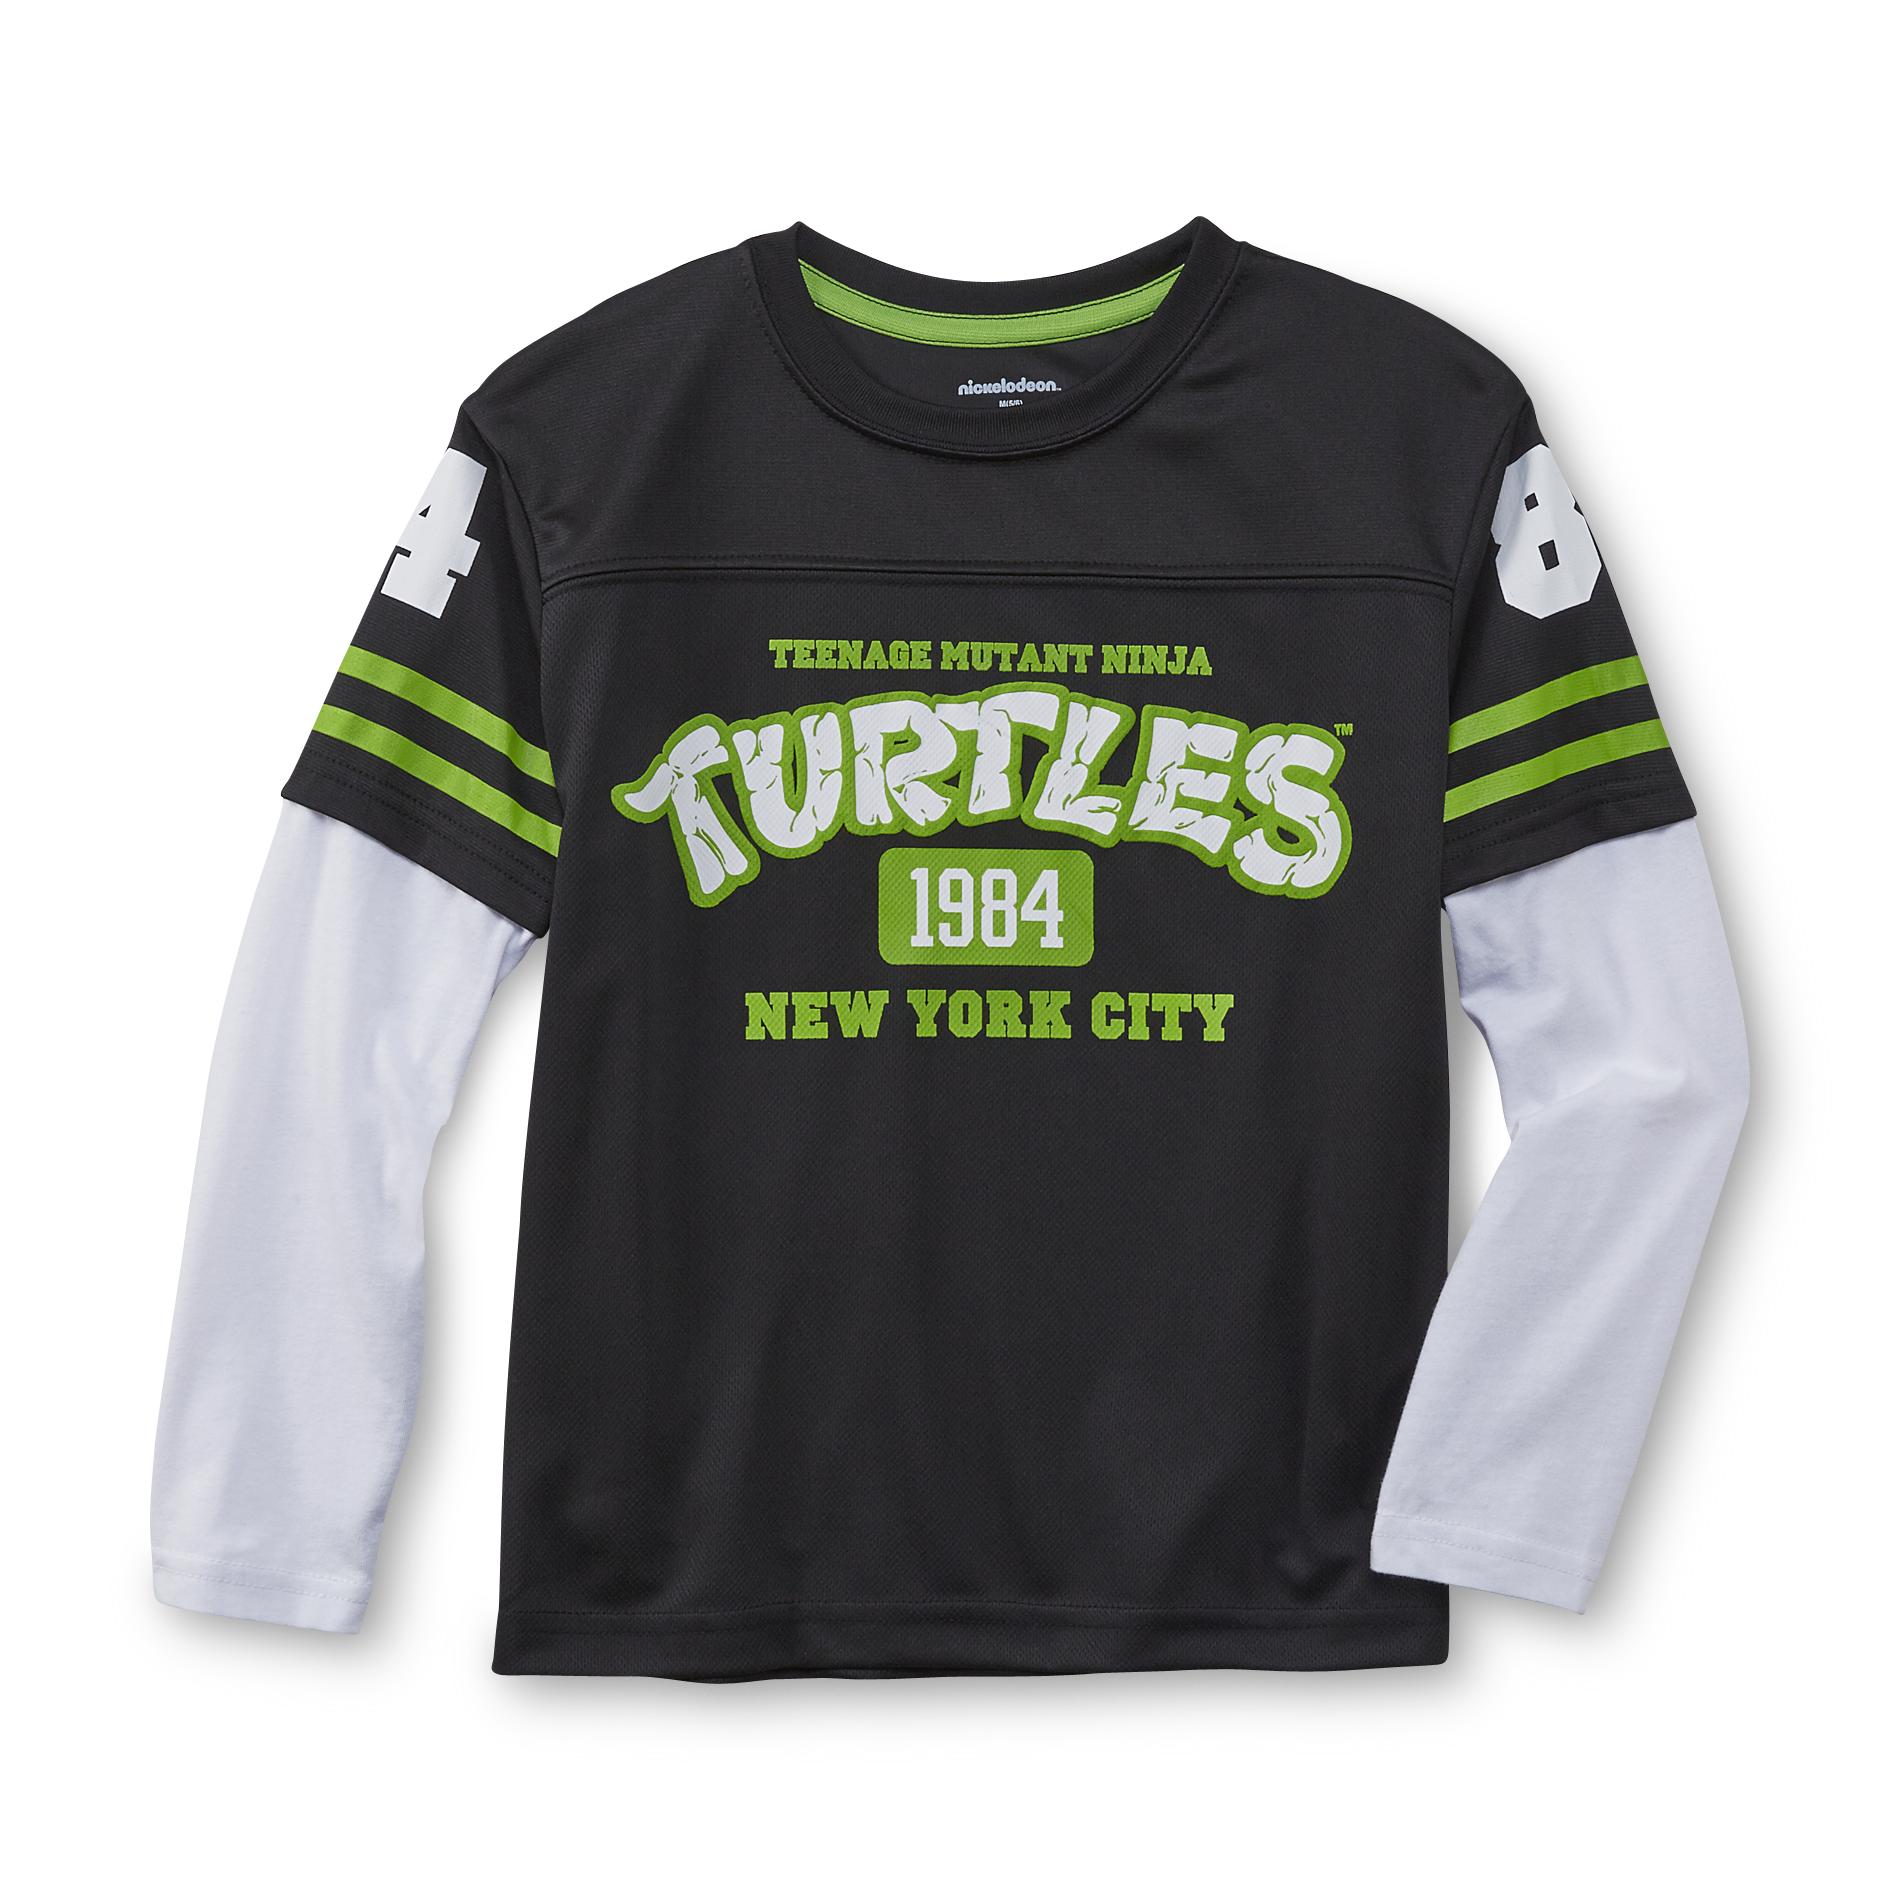 Nickelodeon Teenage Mutant Ninja Turtles Boy's Football Jersey